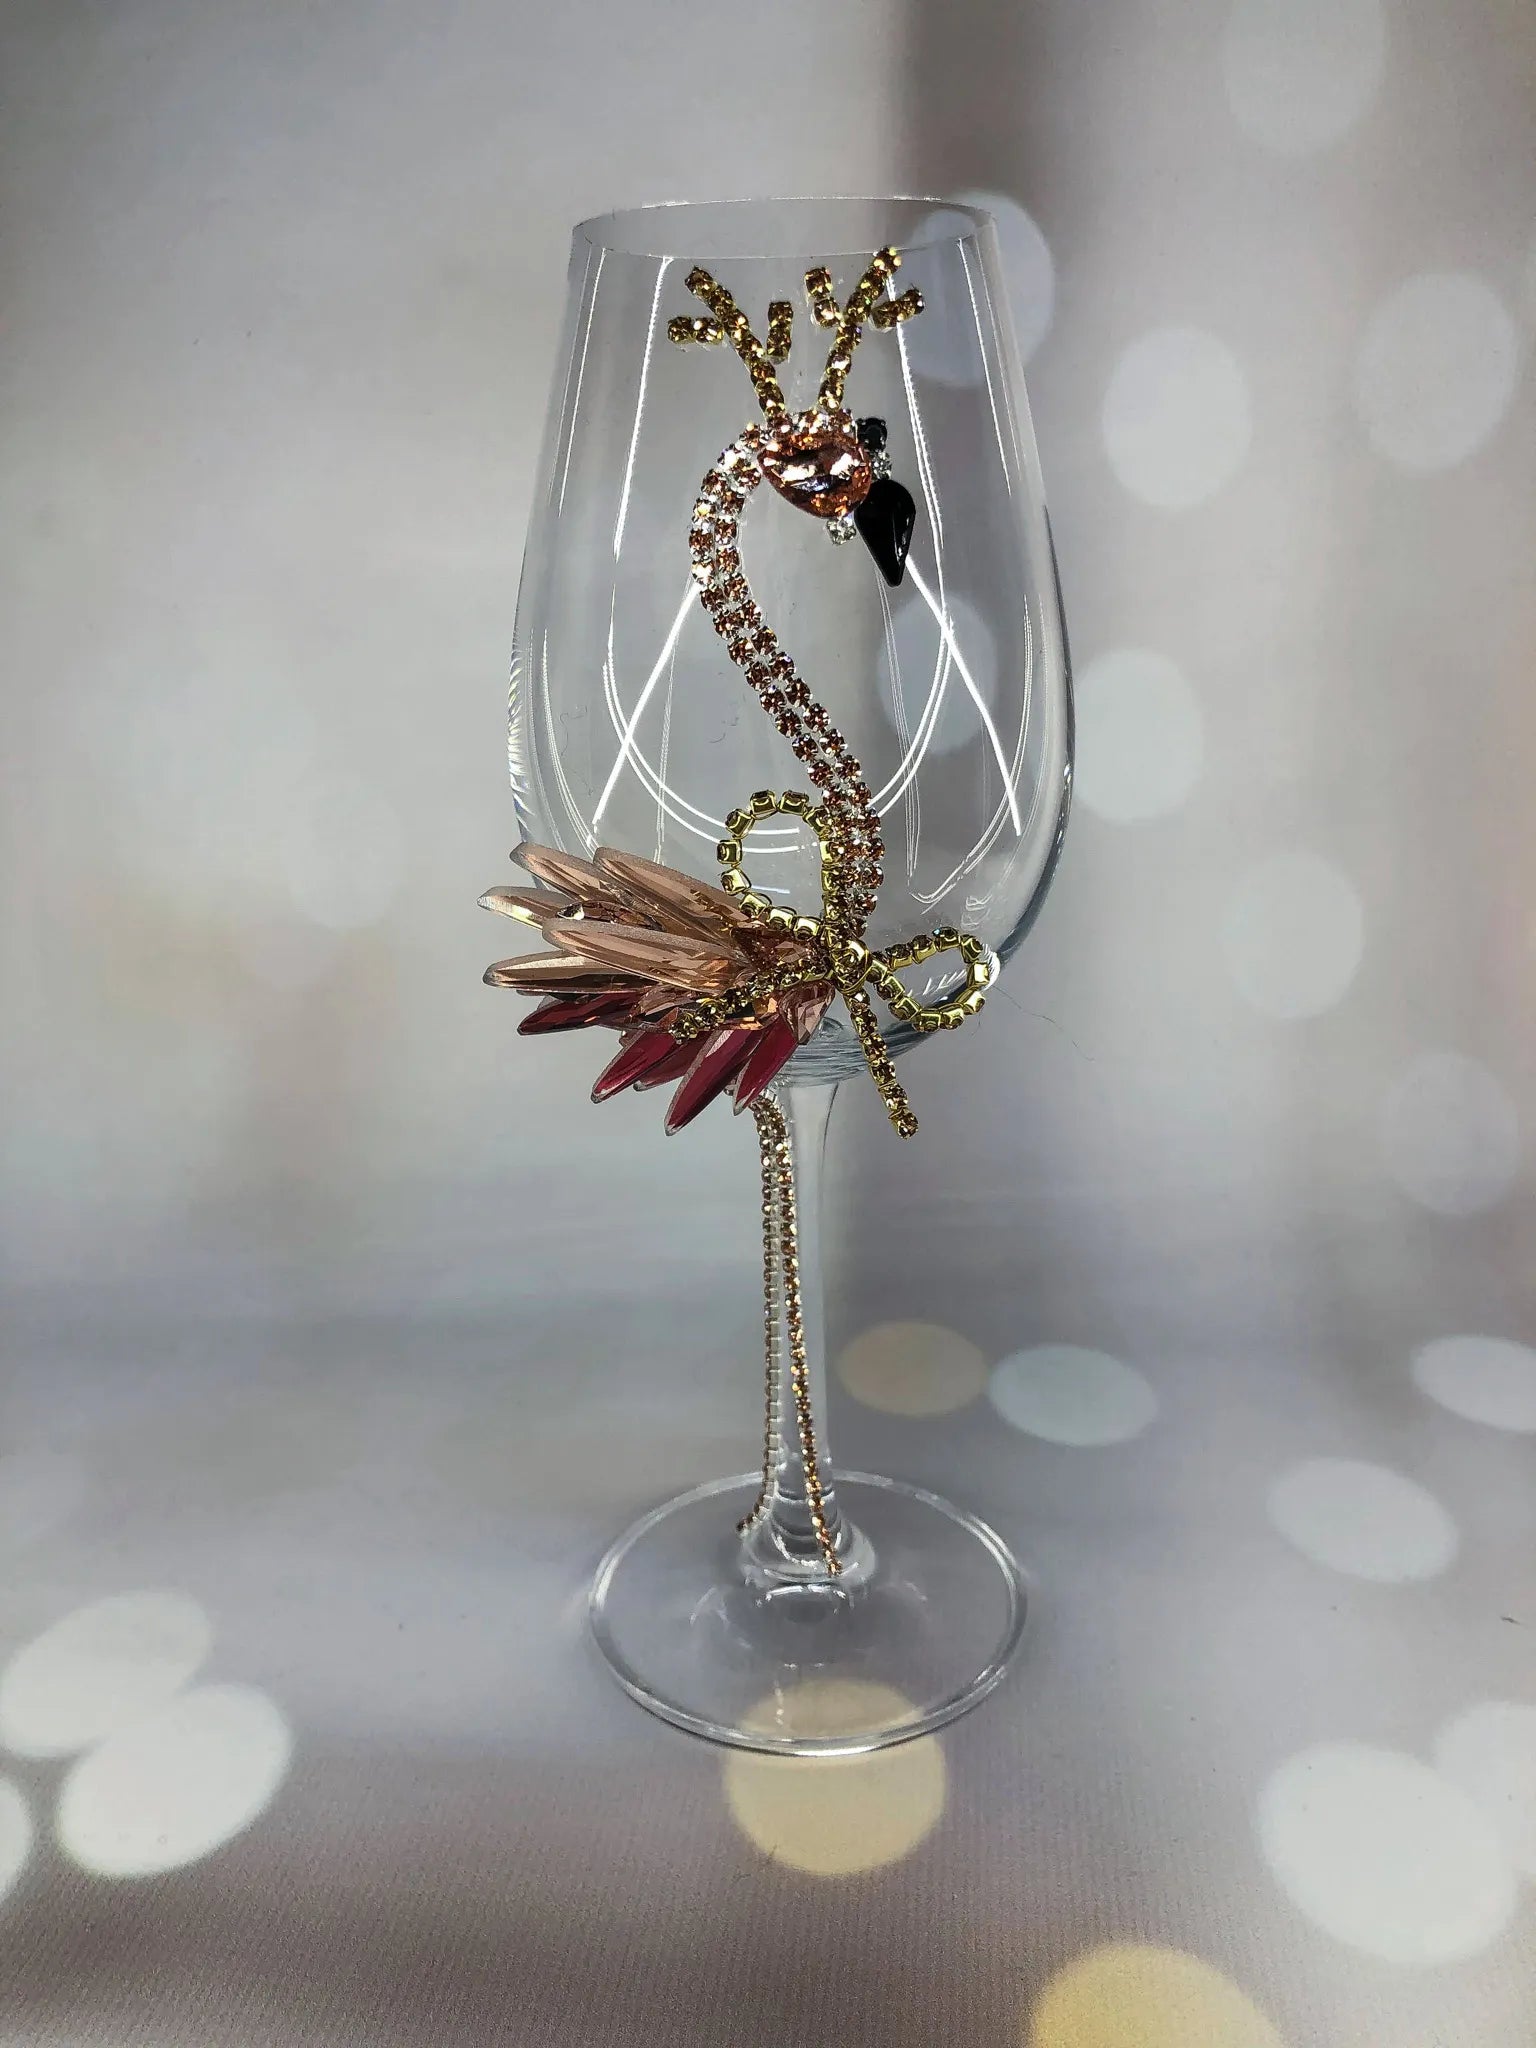 Handmade glass with golden flamingo